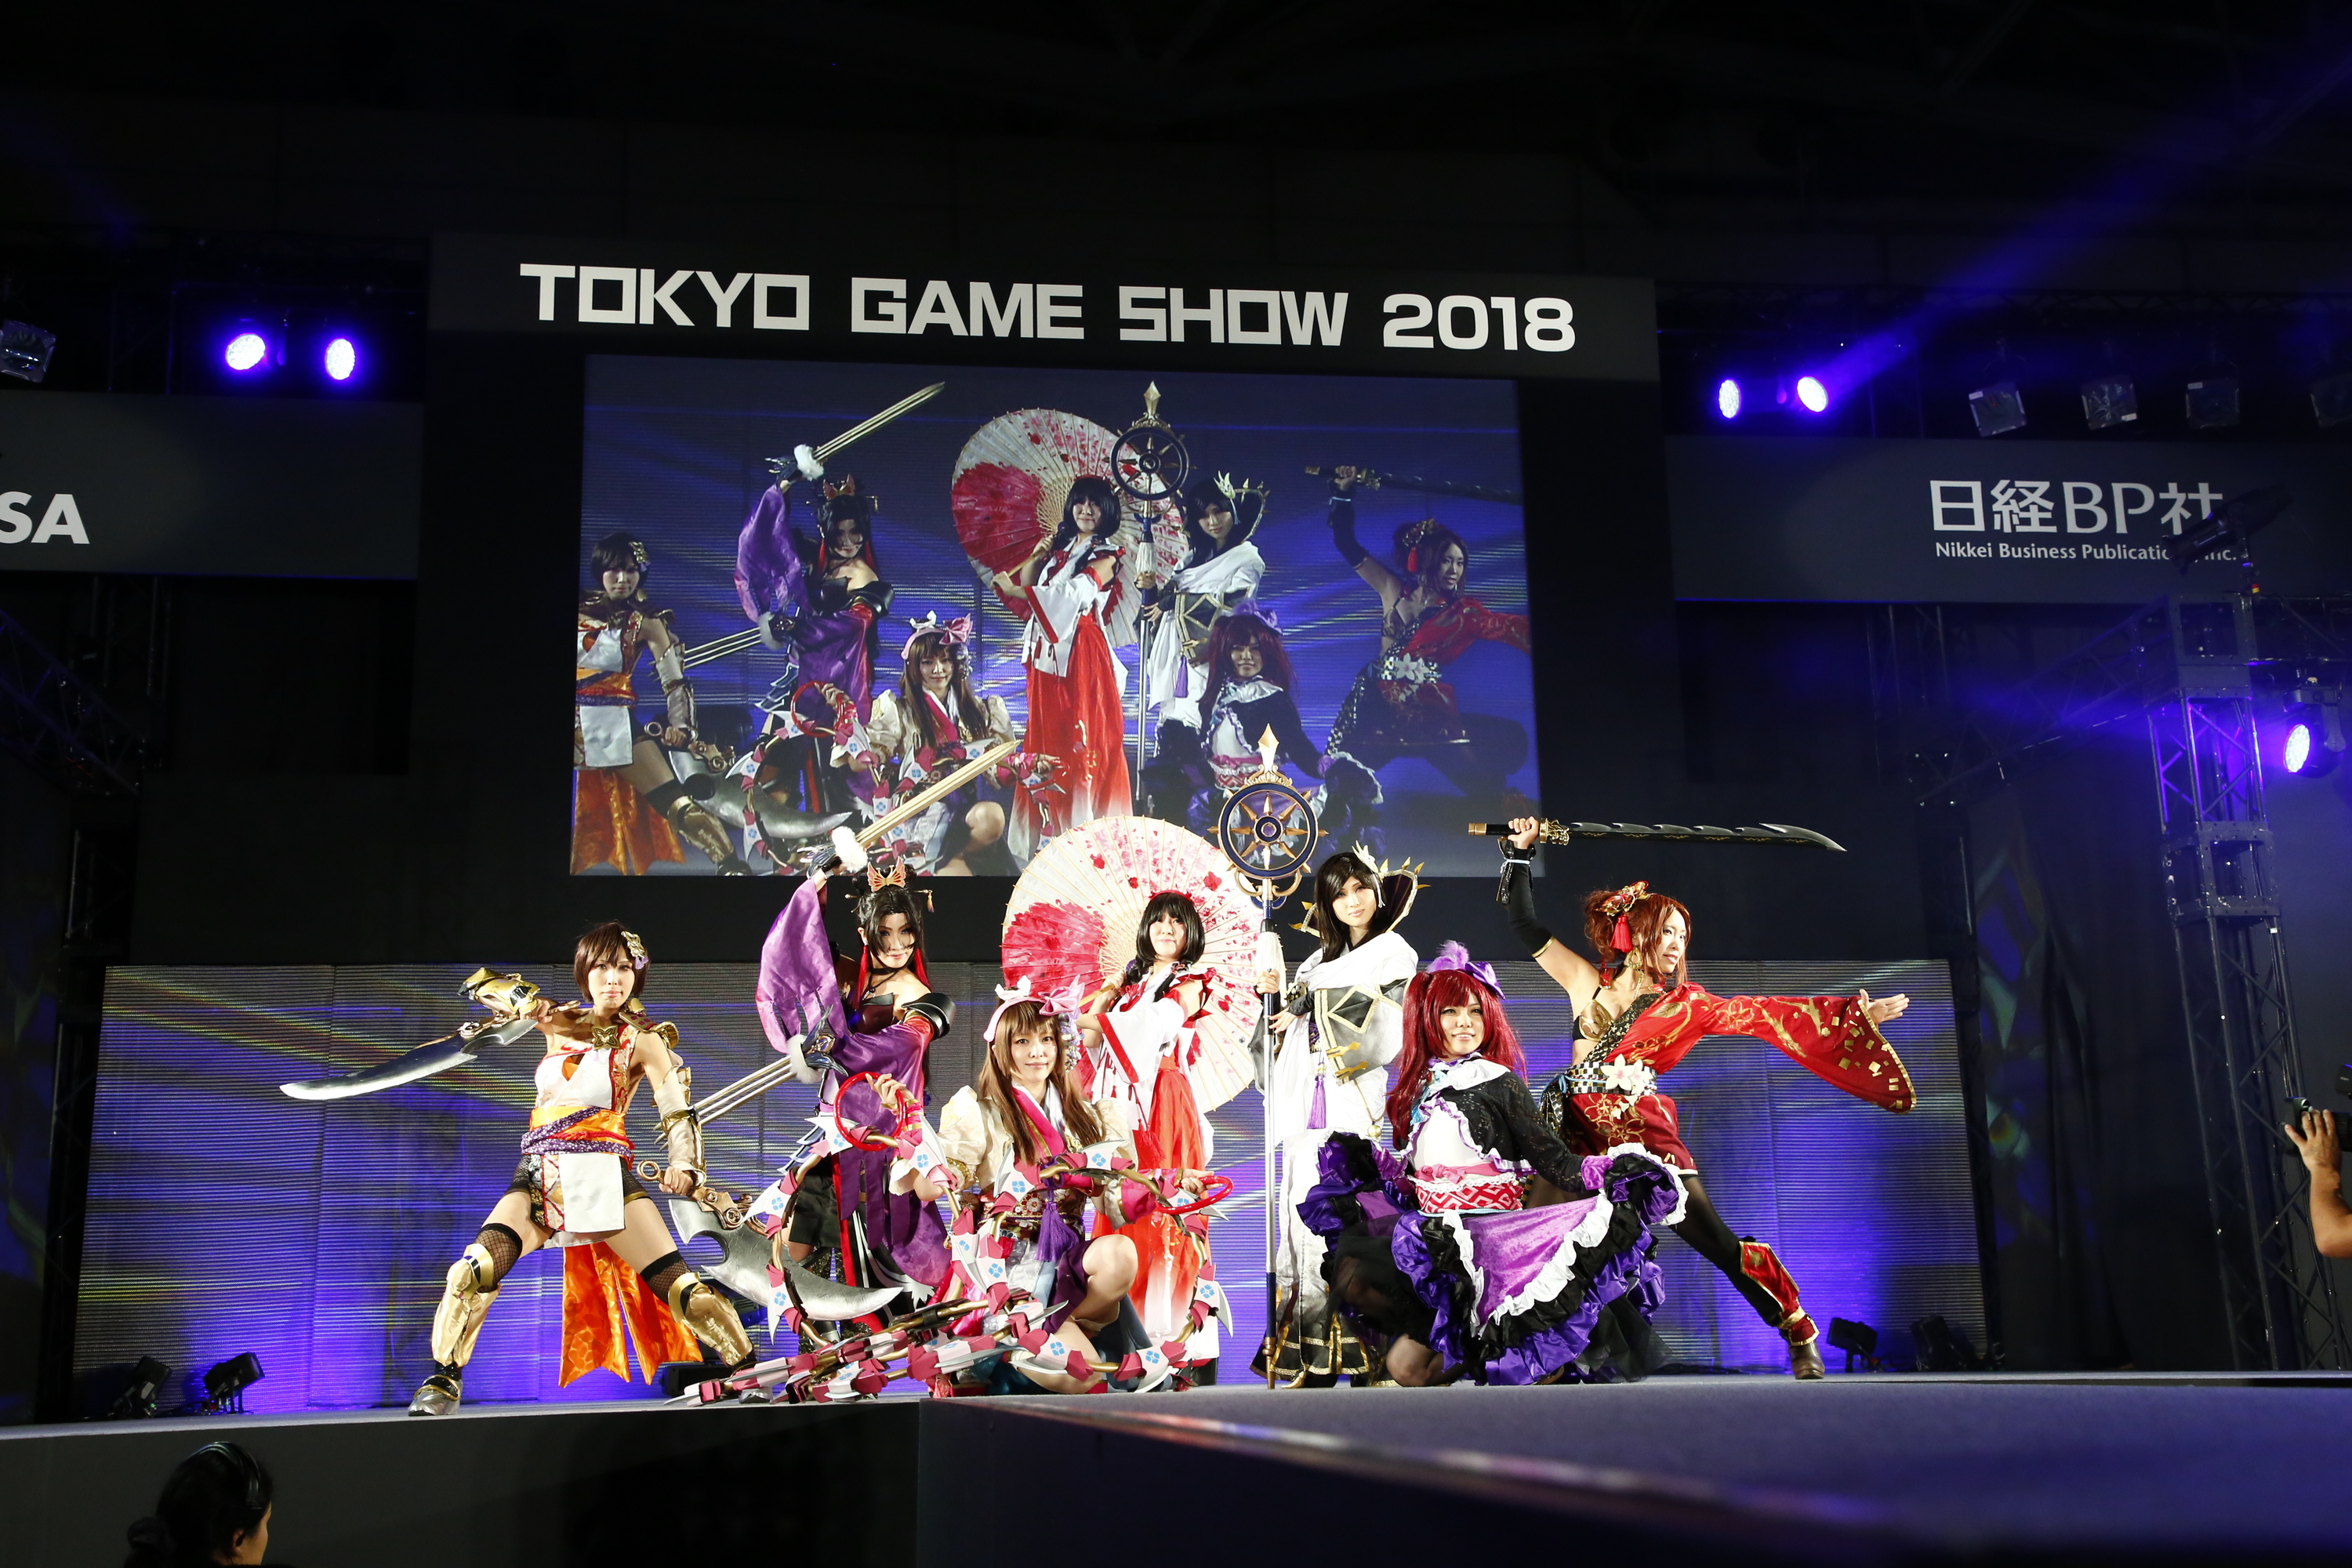 Www game show. Токио гейм шоу. Игровое шоу картинка на сайт. Шоу игра. Фото название игровое шоу.